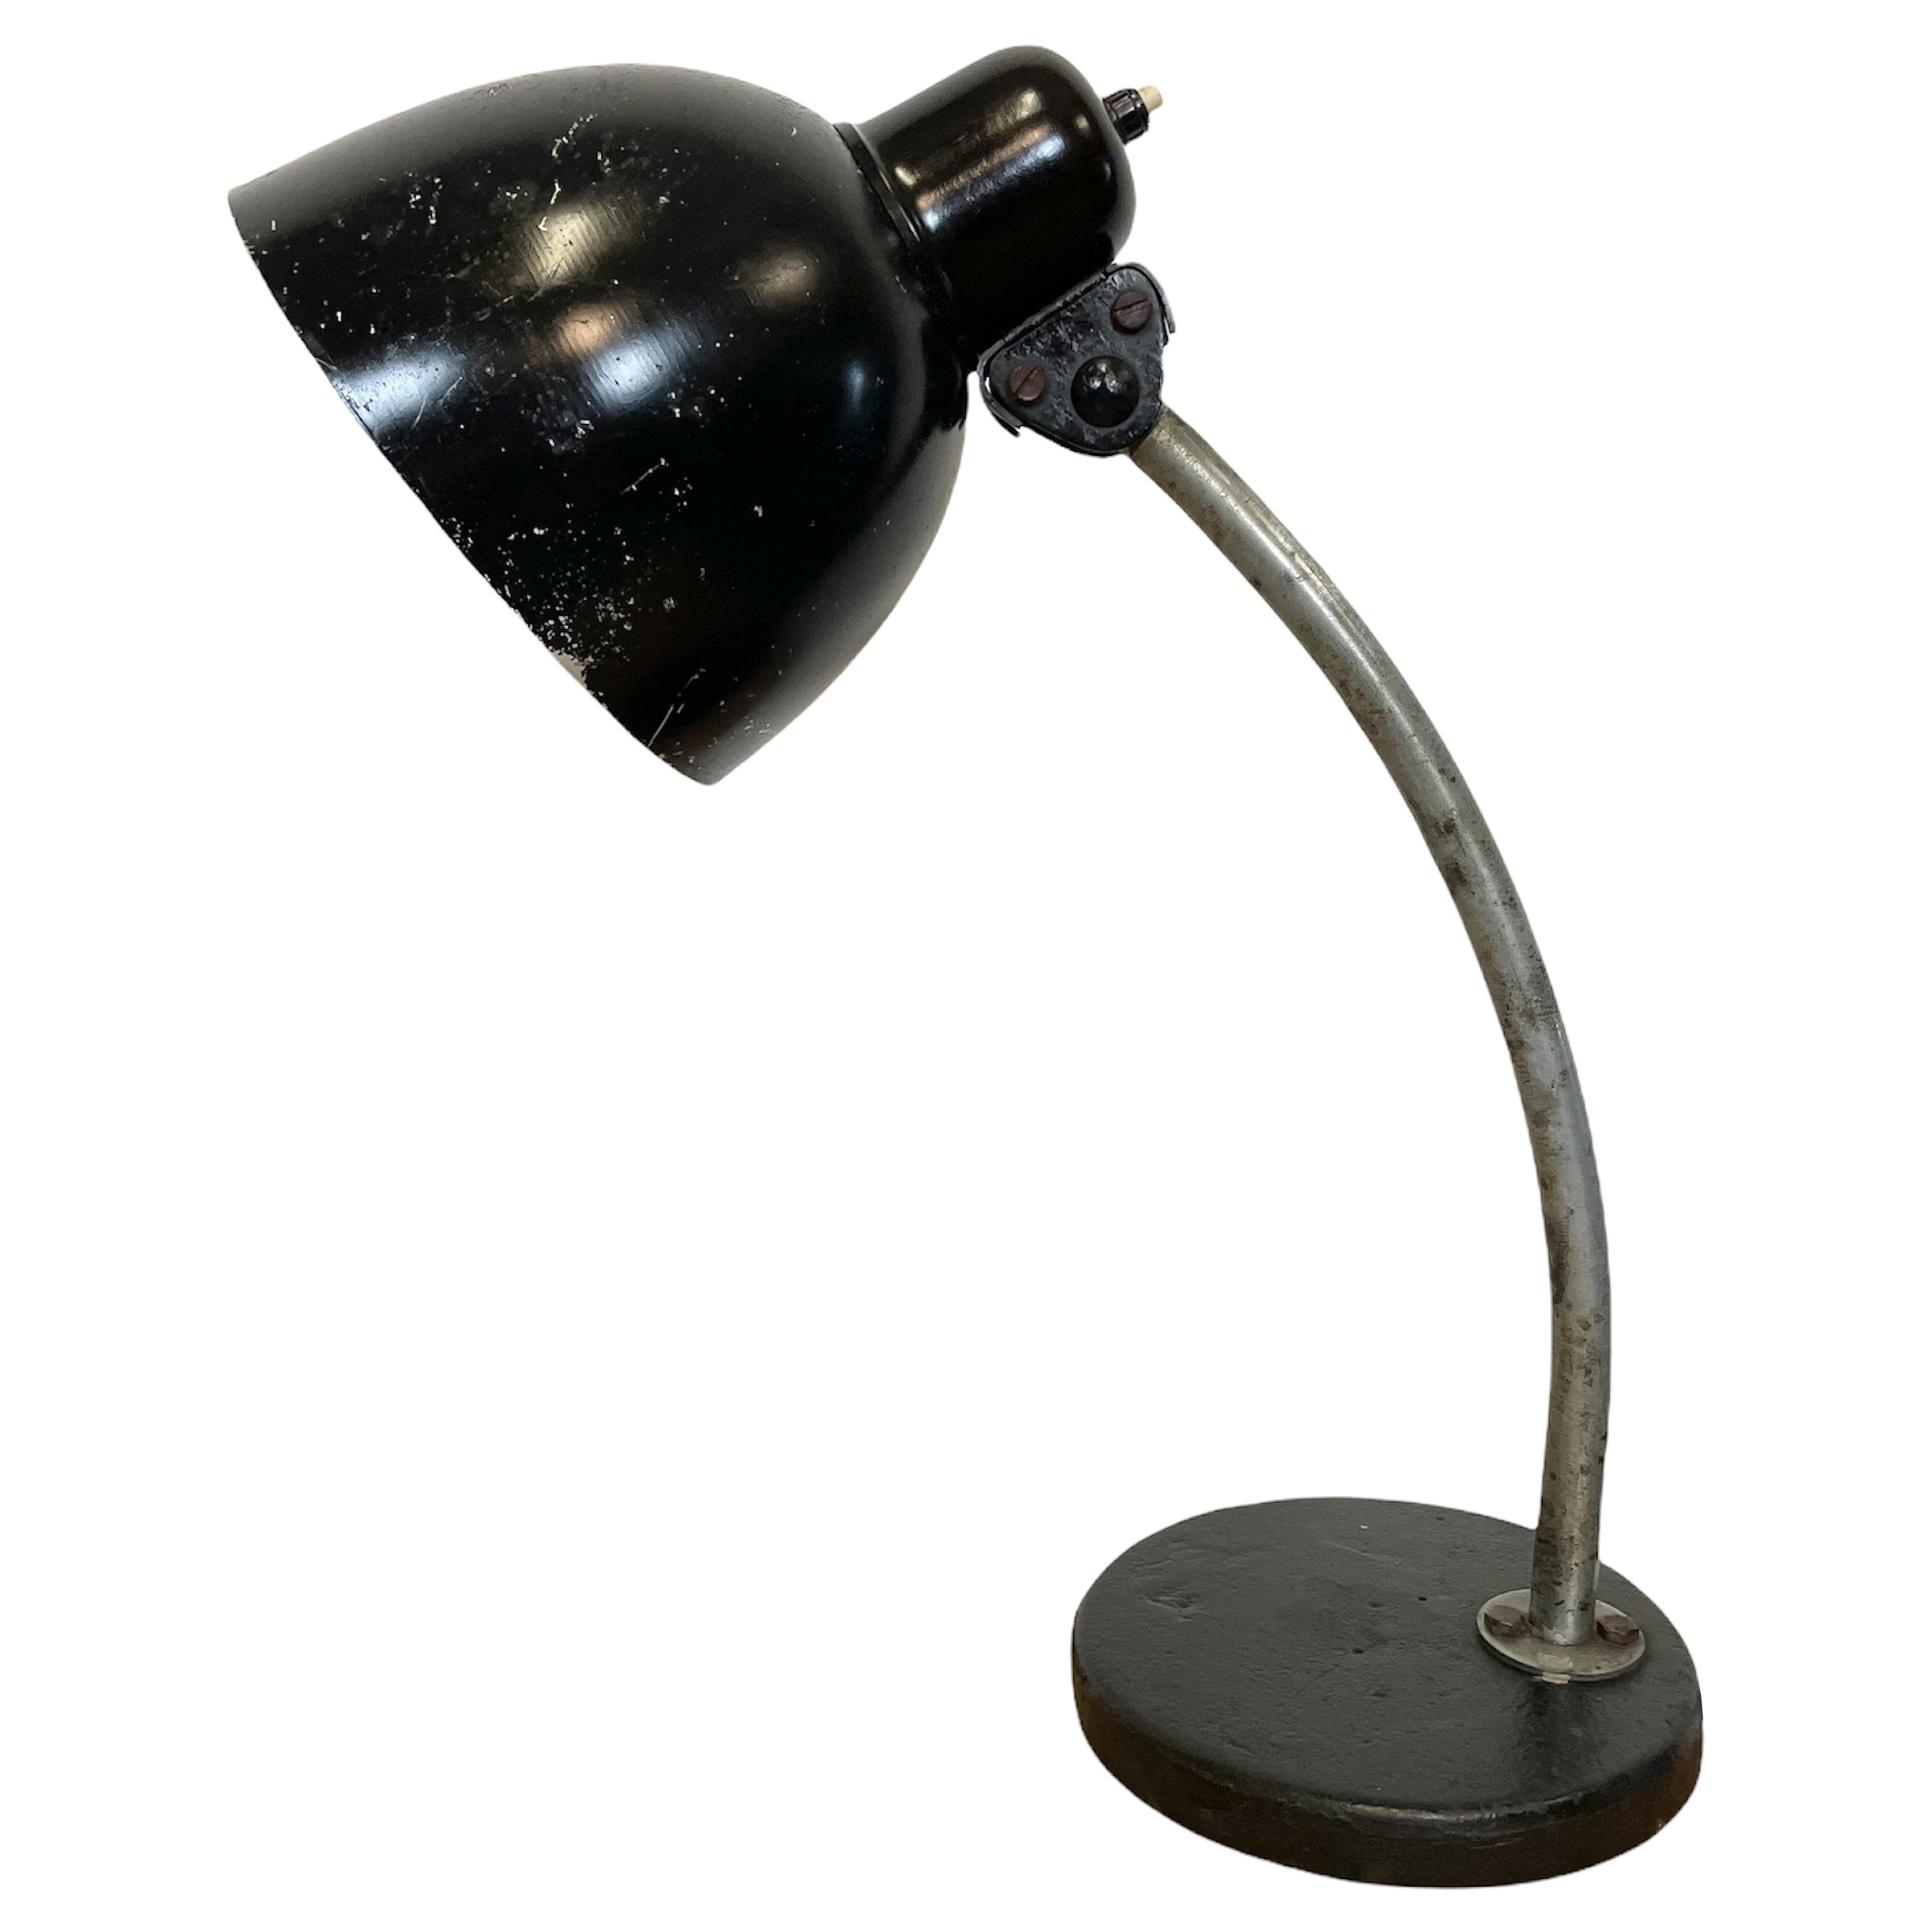 Black Industrial Table Lamp, 1950s